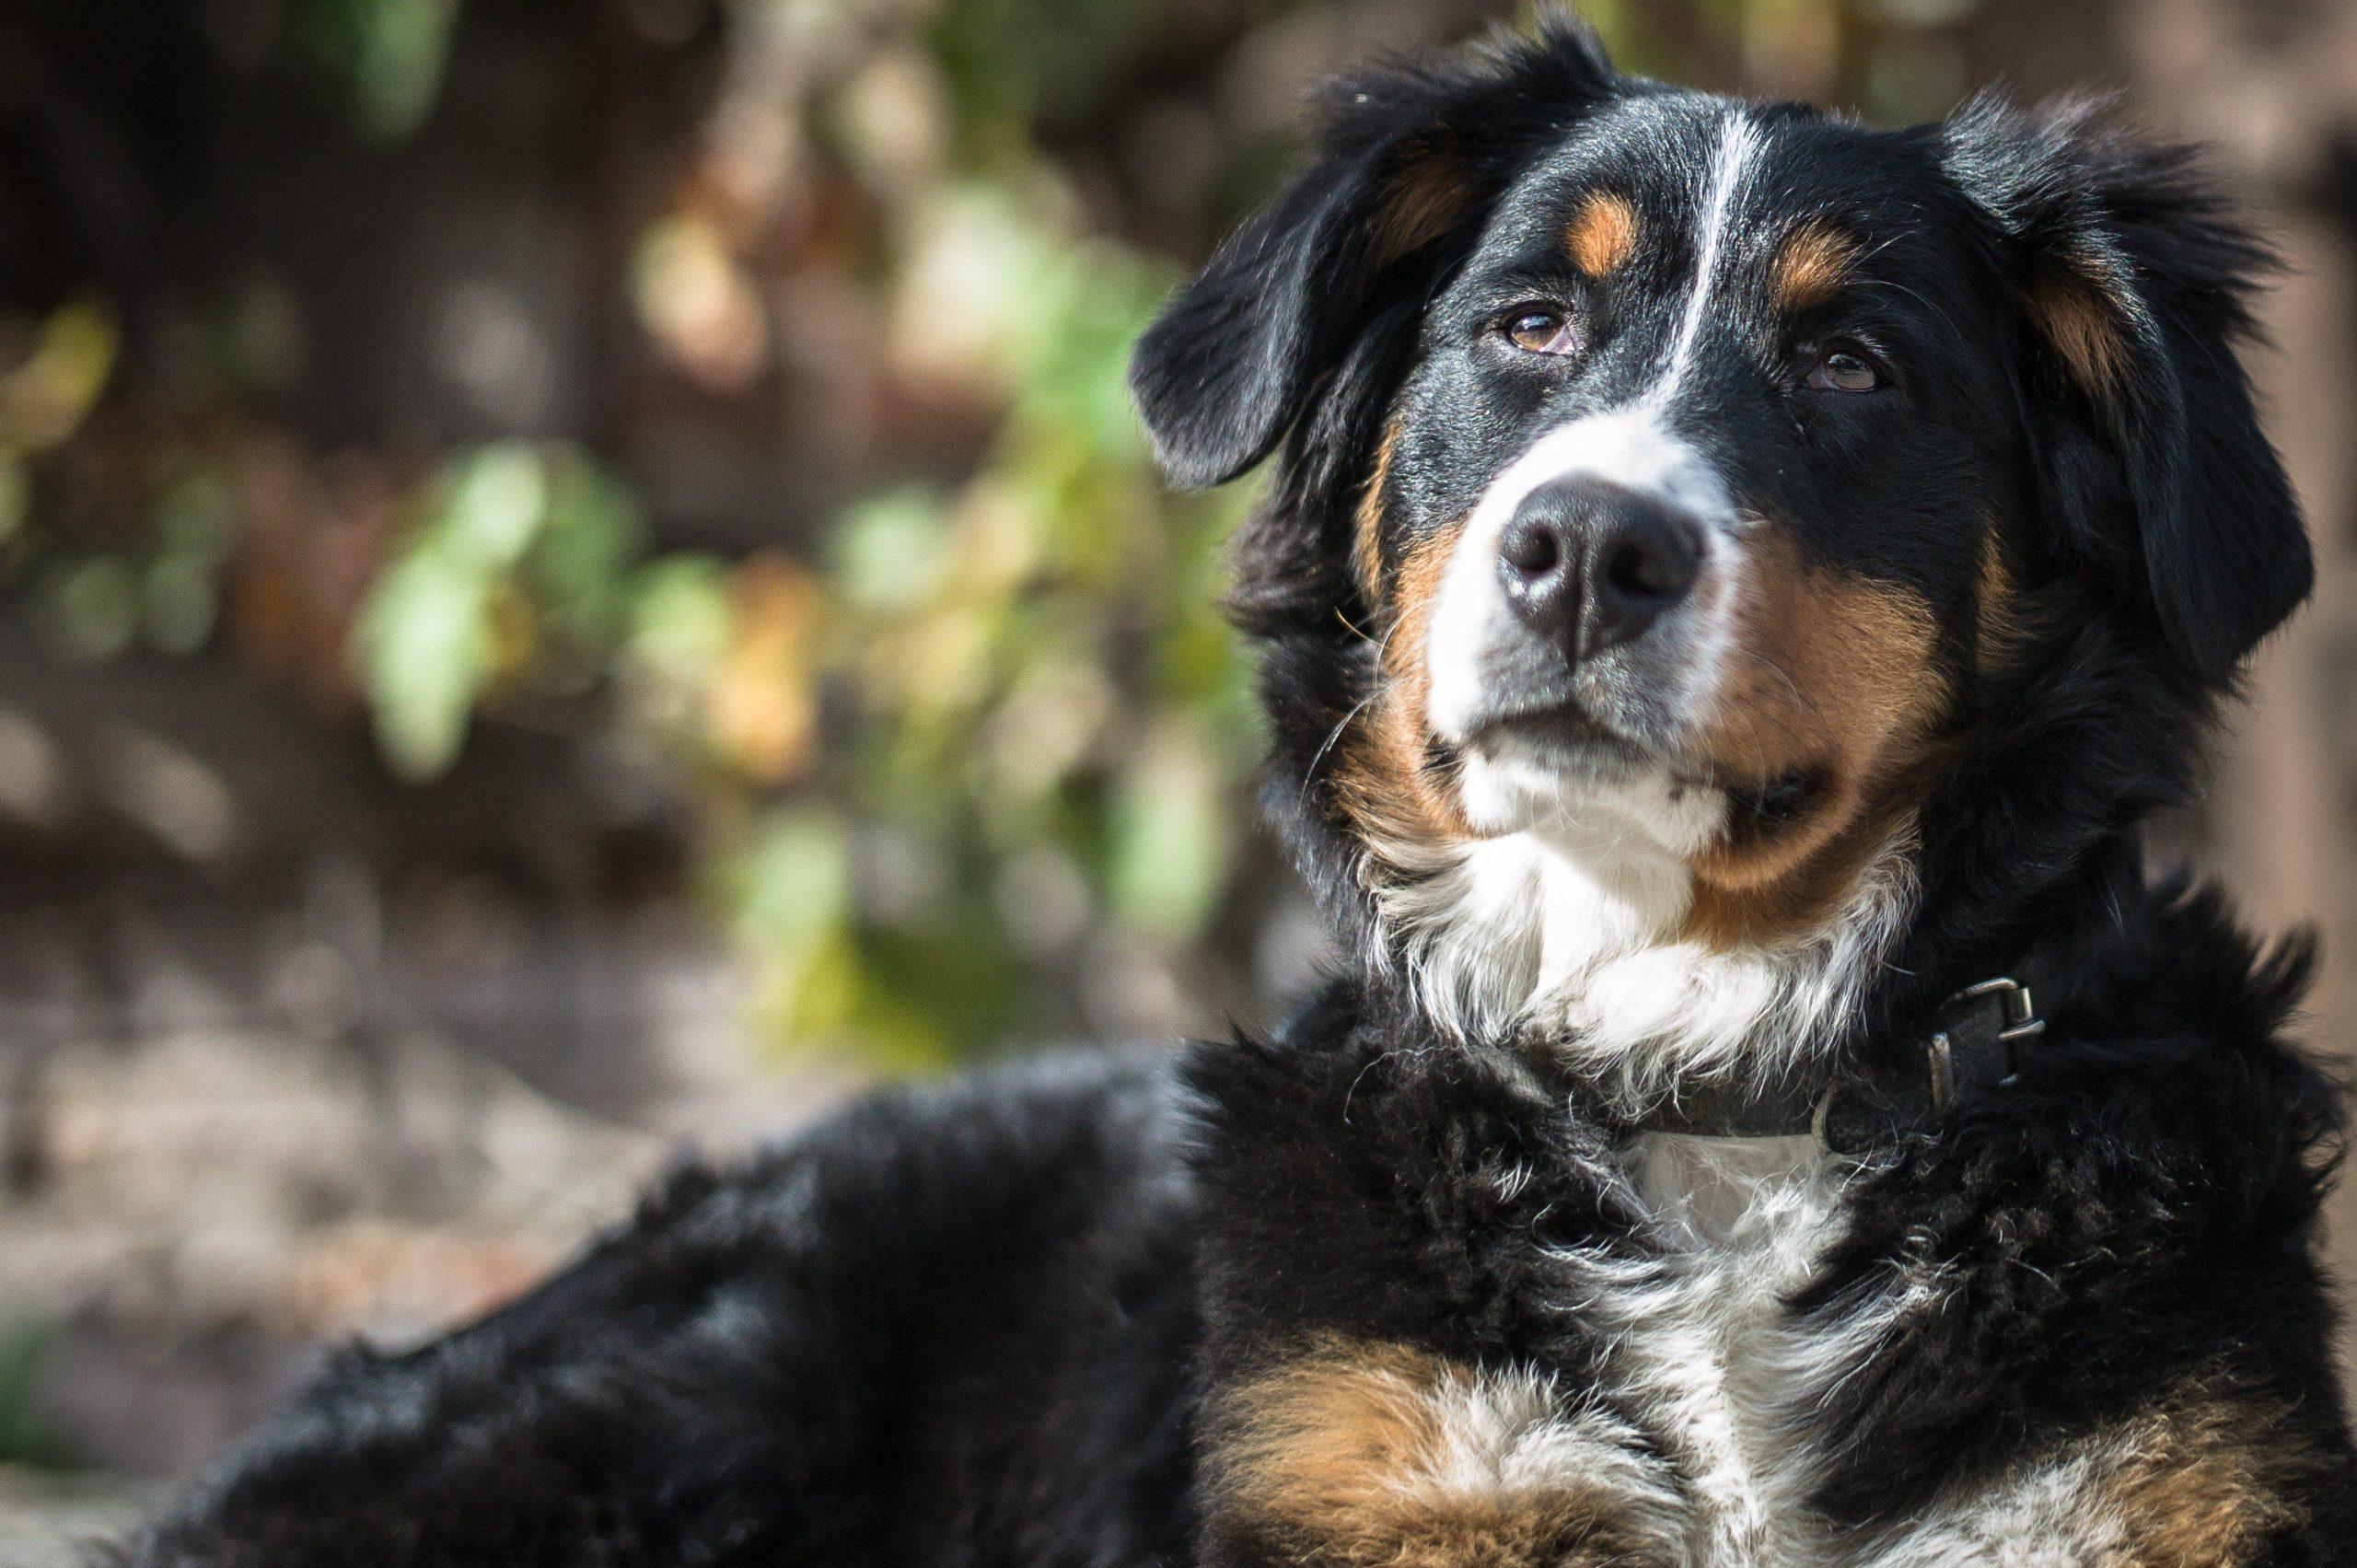 8 Heartbreaking Signs Of Aging In Dogs